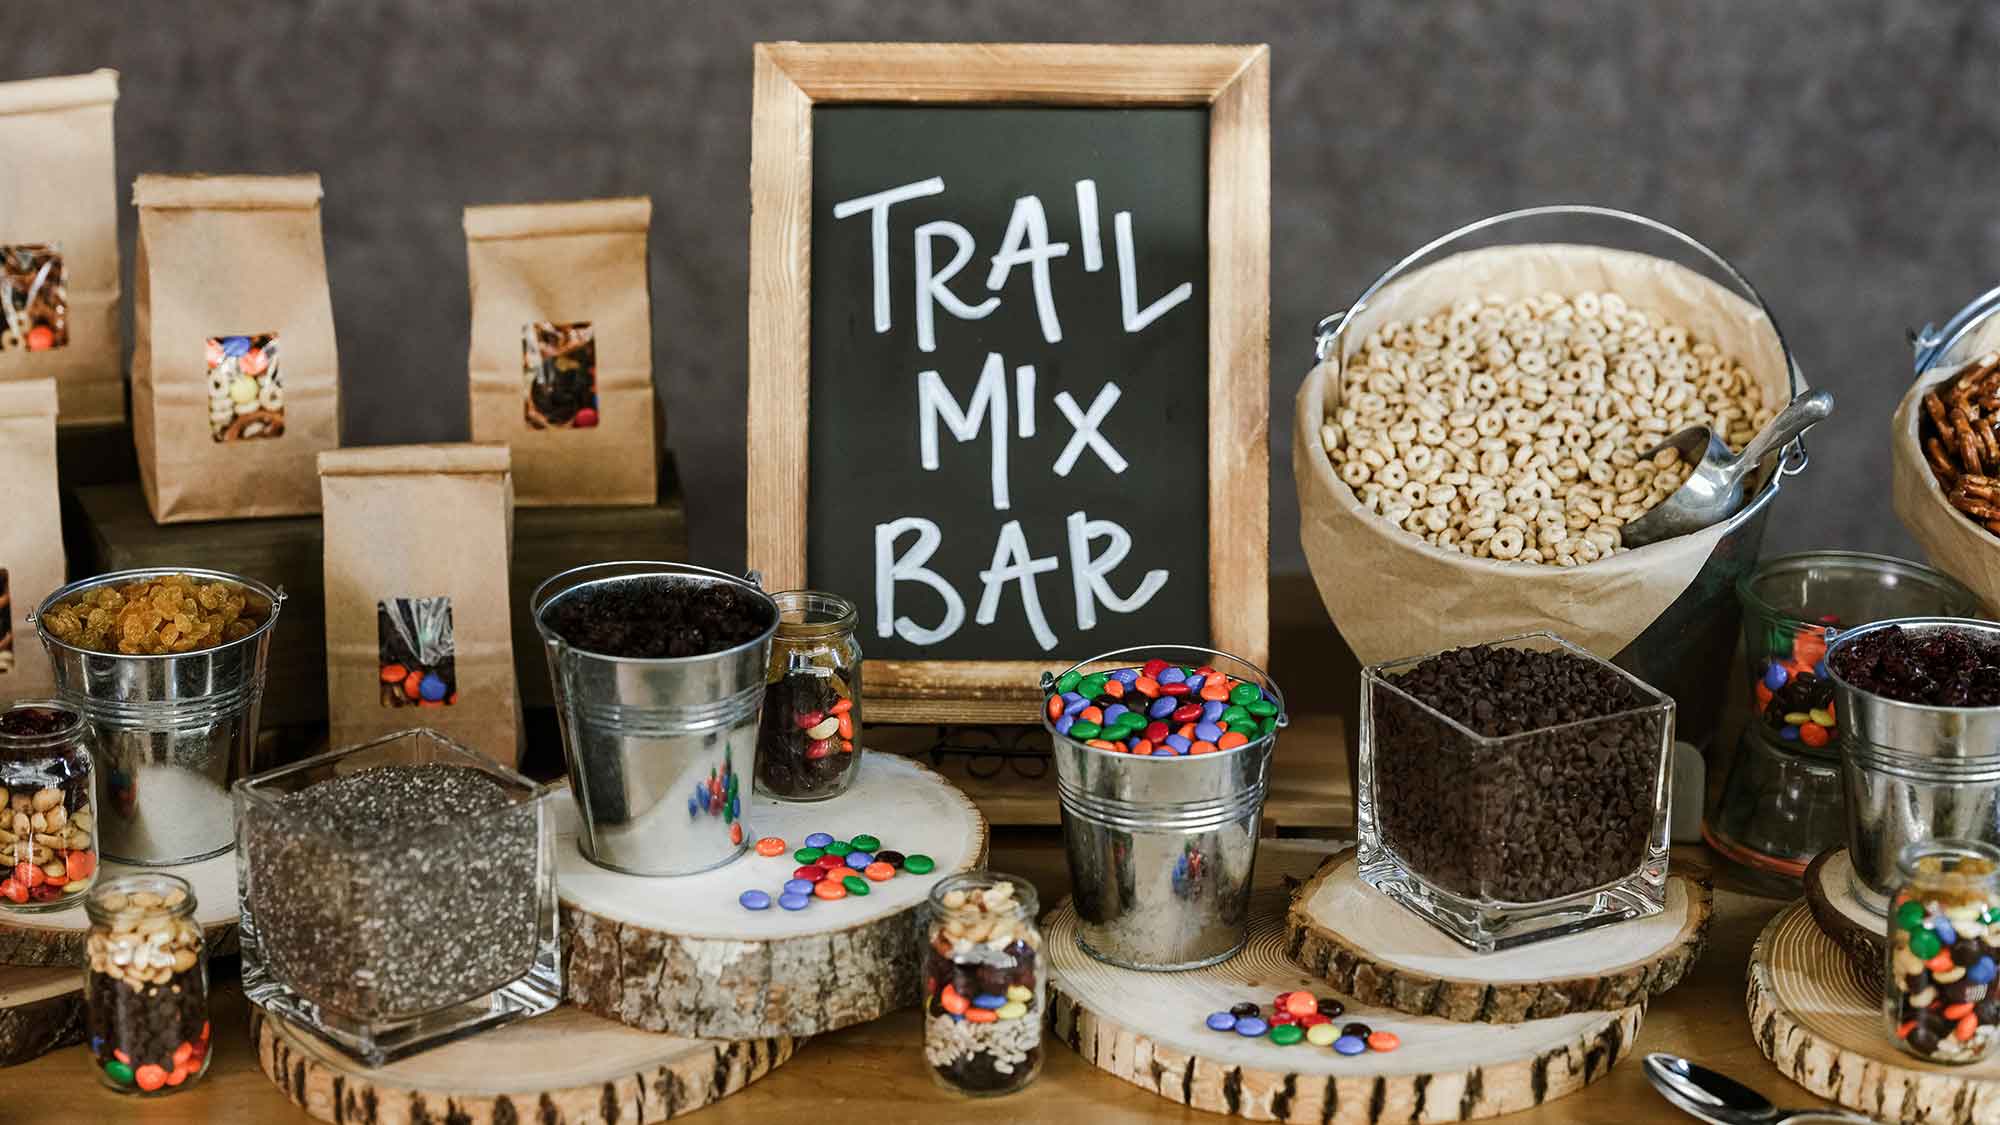 trail mix bar photo